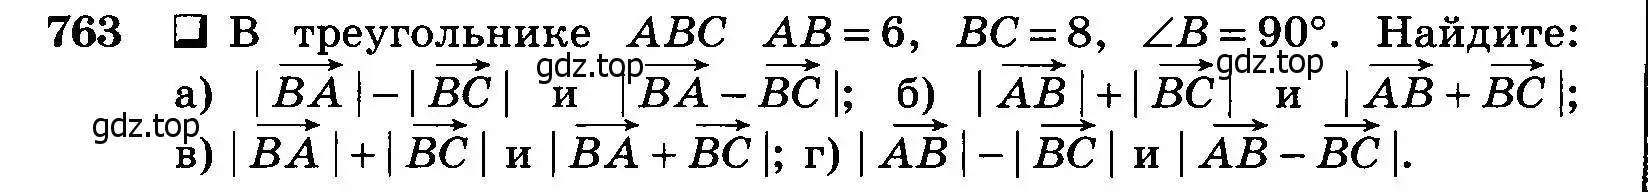 Условие номер 763 (страница 200) гдз по геометрии 7-9 класс Атанасян, Бутузов, учебник